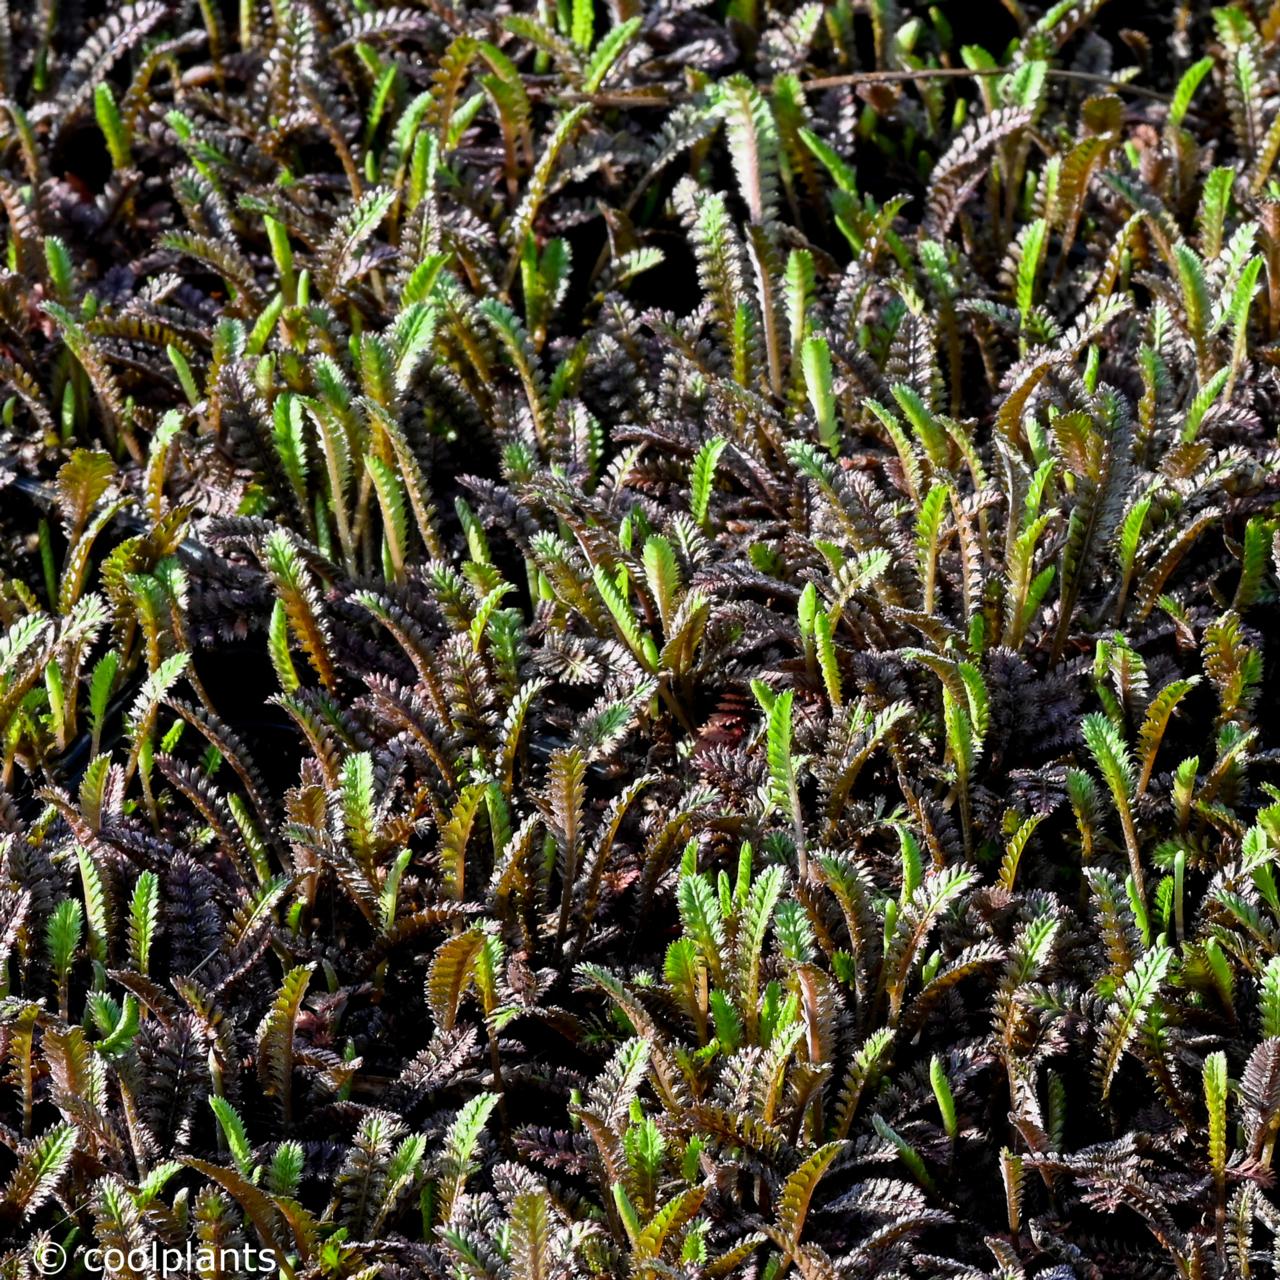 Leptinella squalida 'Platt's Black' plant